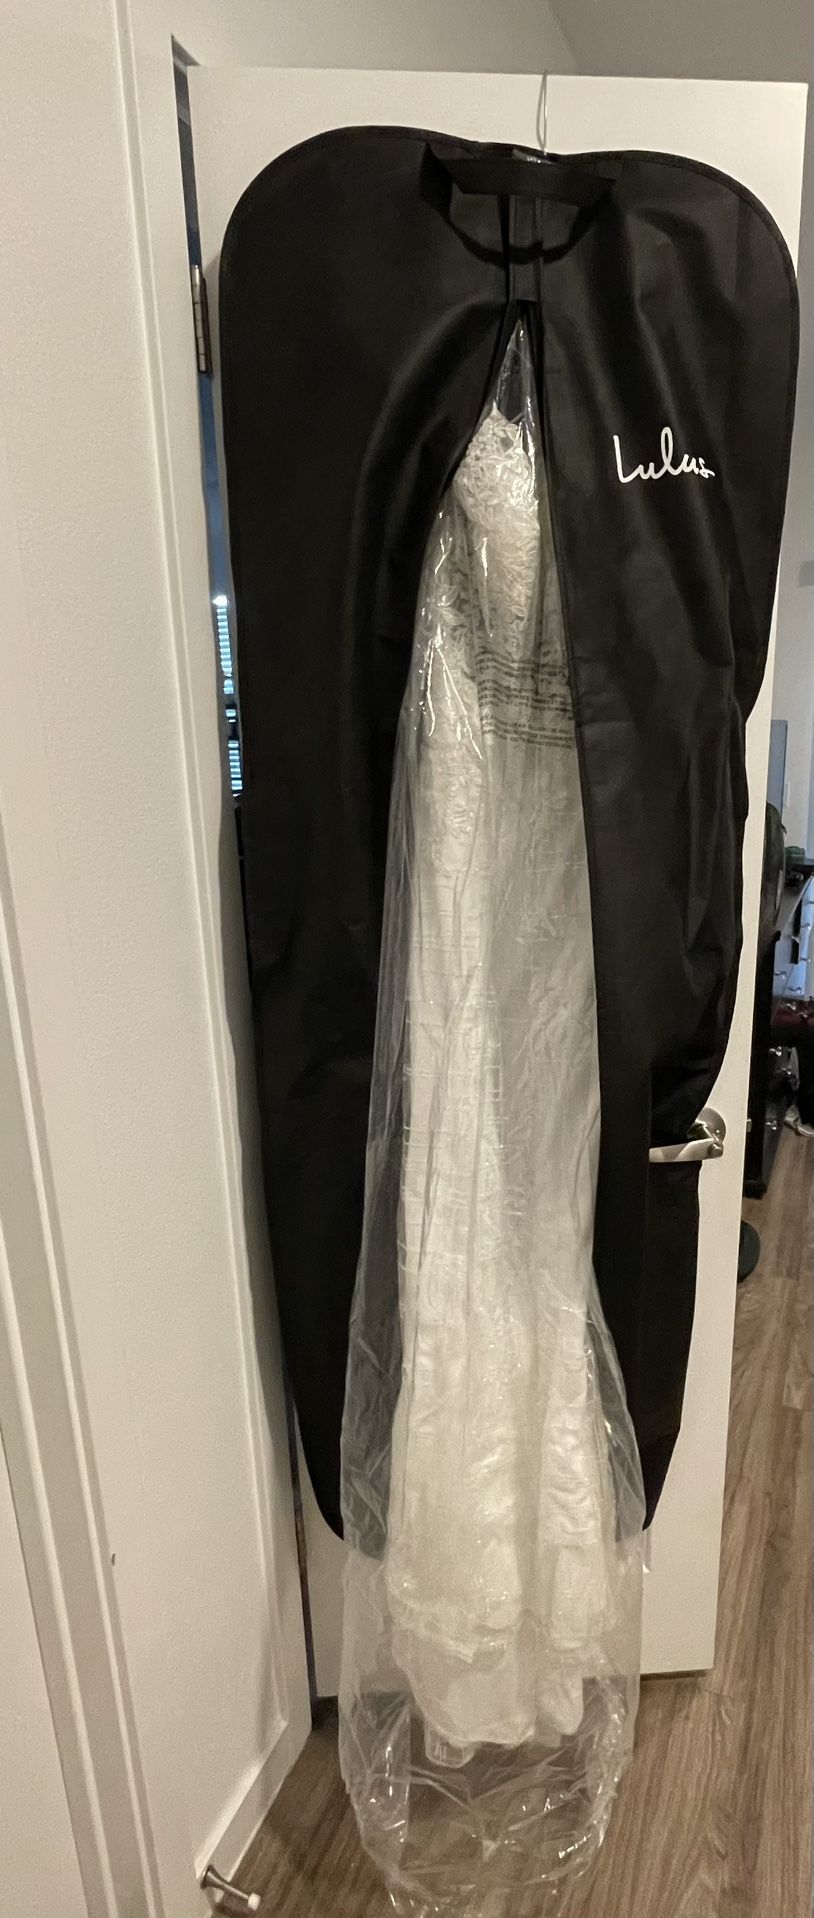 Lulu’s Wedding Dress